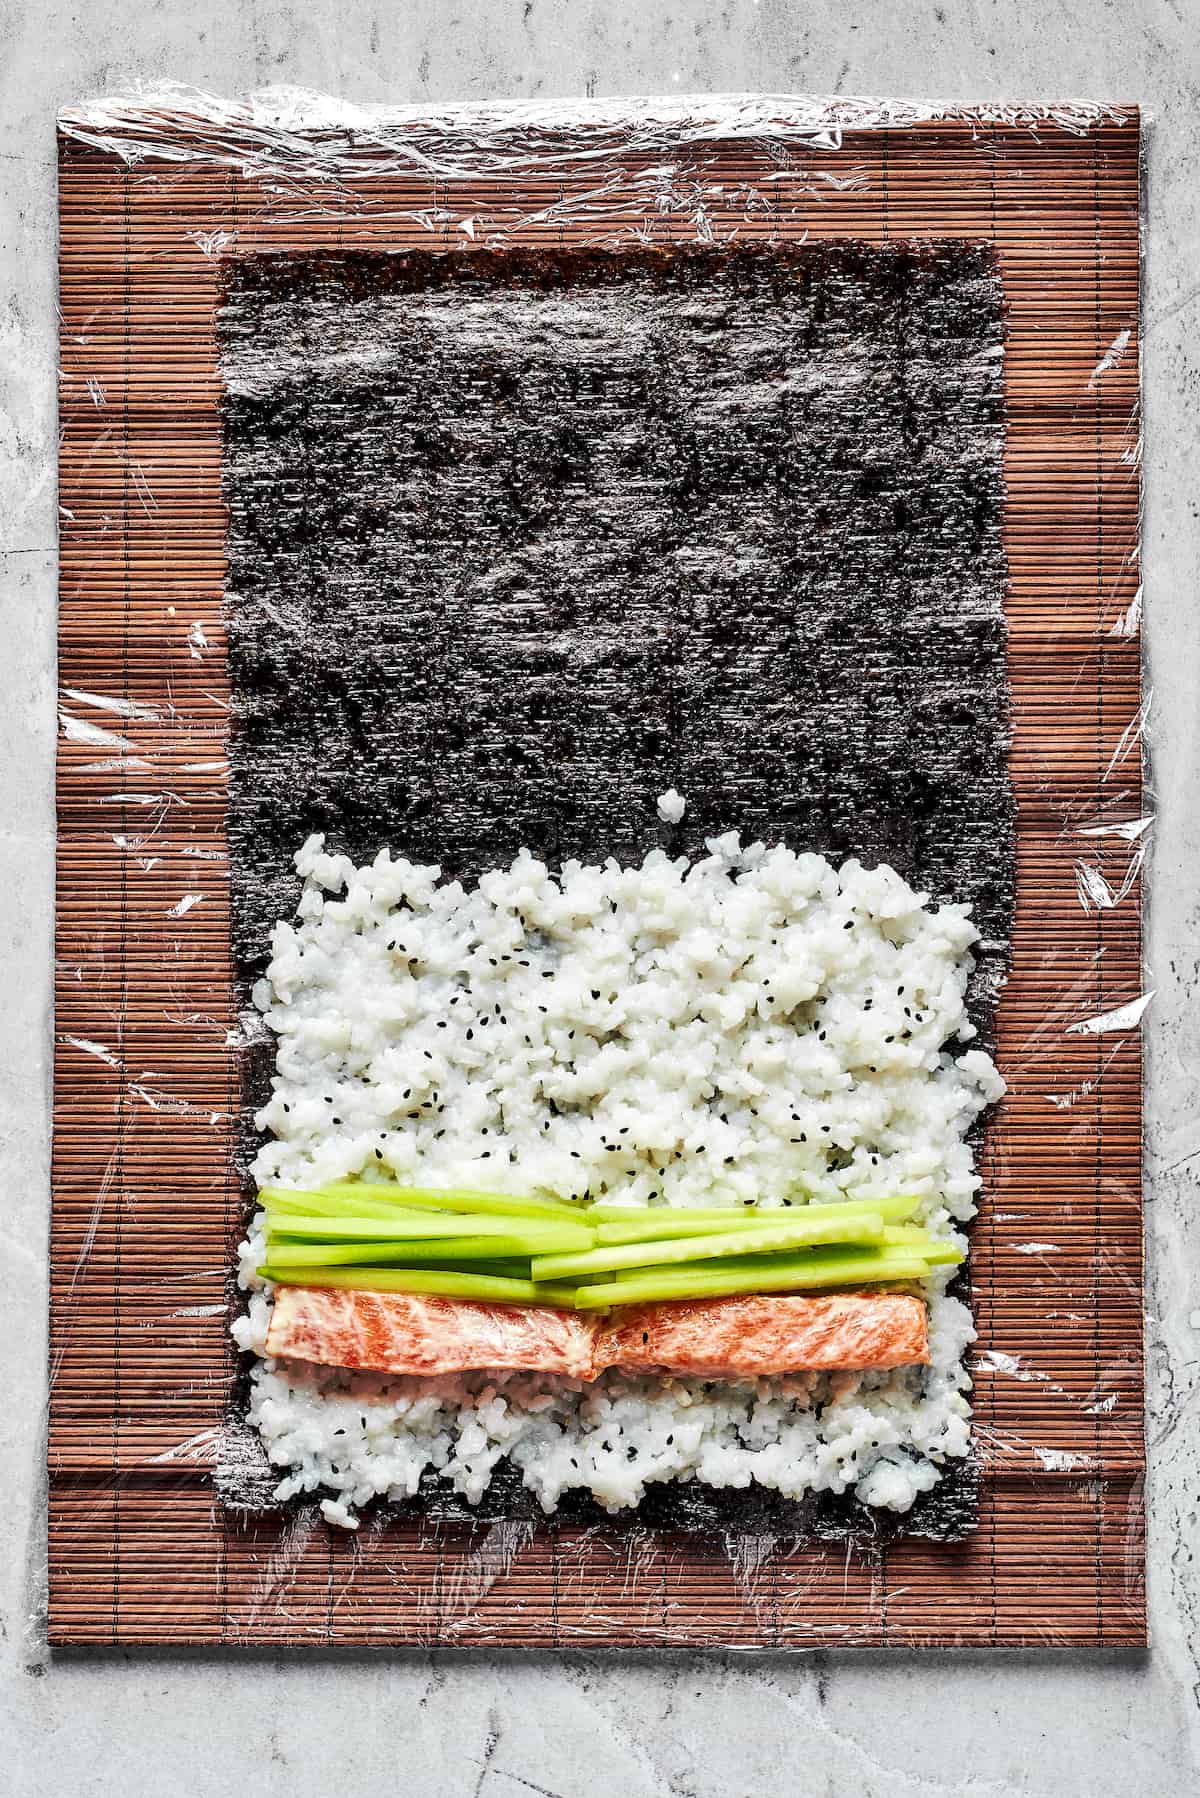 Rice, salmon, and avocado on nori sheets